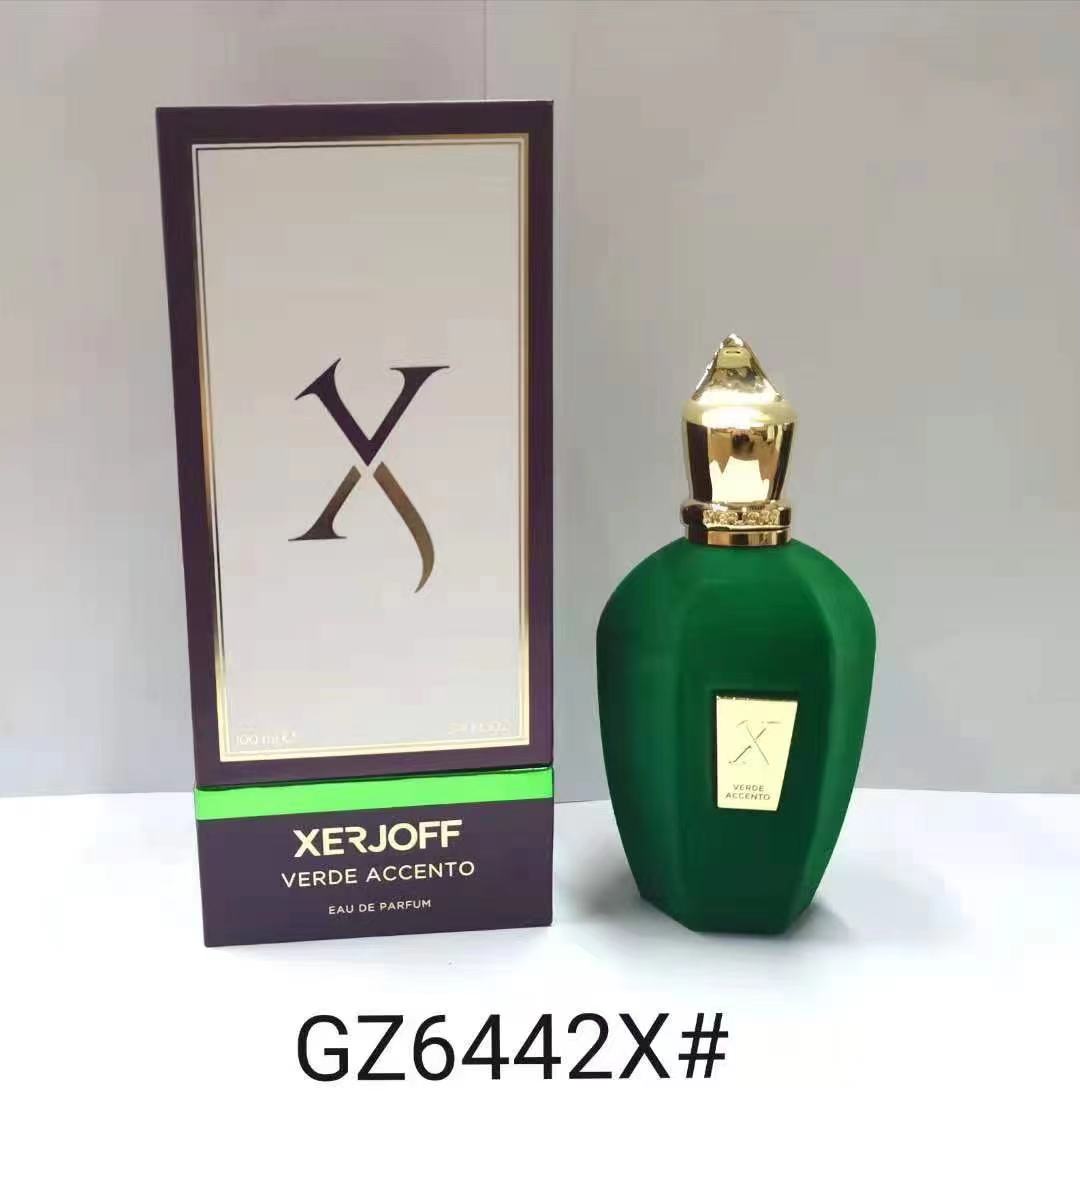 

Xerjoff V Coro Fragrance VERDE ACCENTO EDP Luxuries designer cologne perfume for women lady girls 90ml Parfum spray charming fragrance